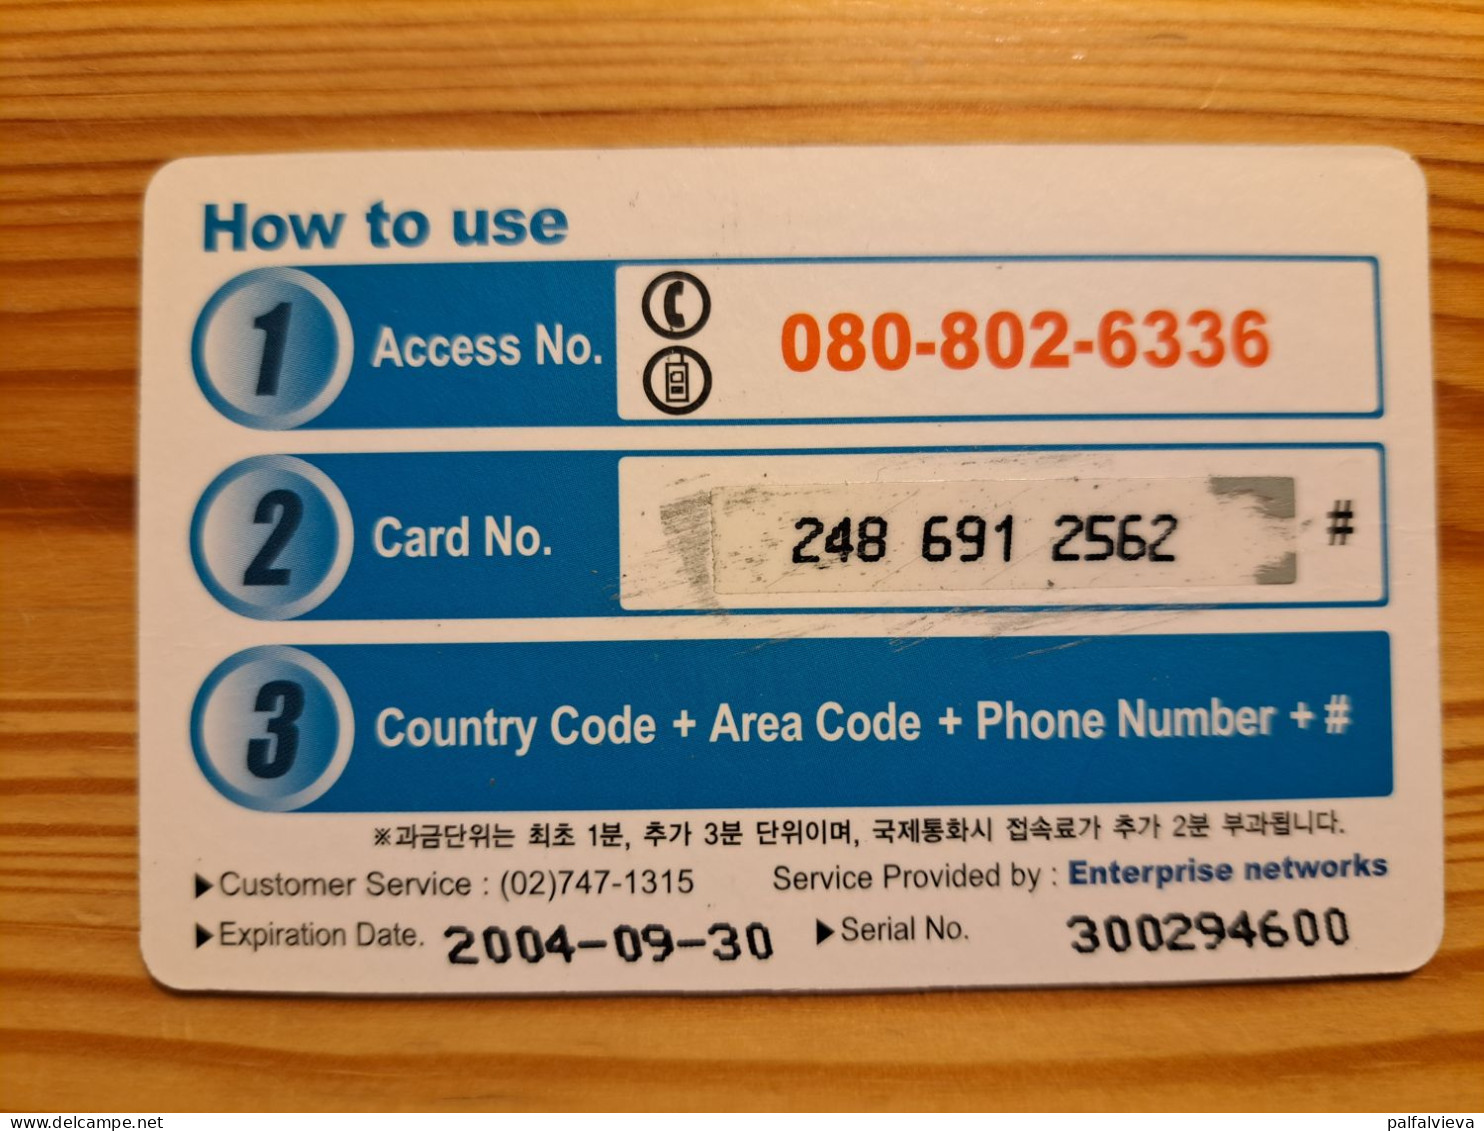 Prepaid Phonecard South Korea, Telcosline, SM - Korea (Süd)